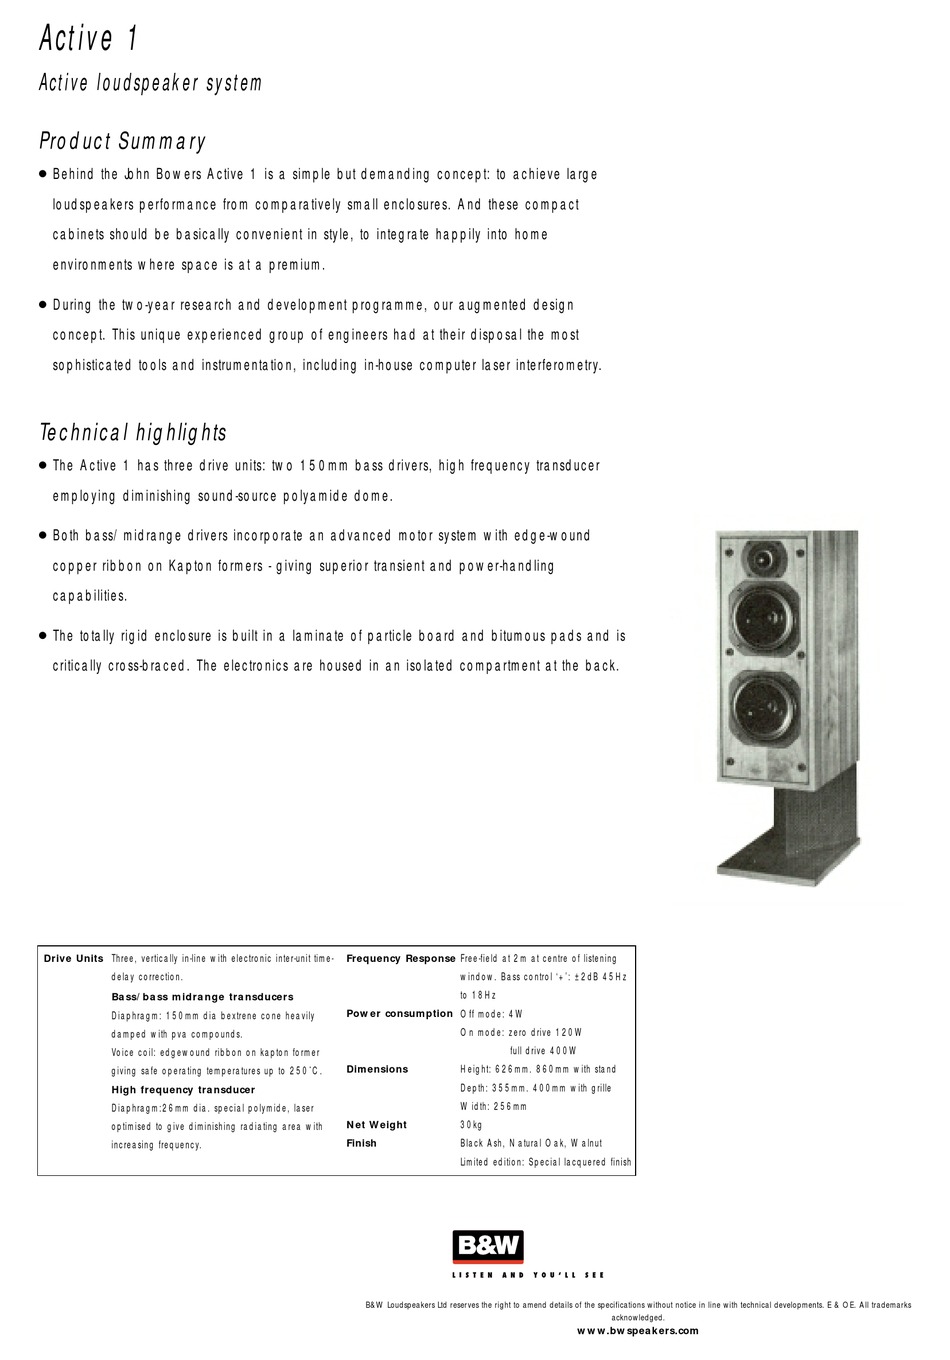 loudspeaker handbook john eargle pdf to word